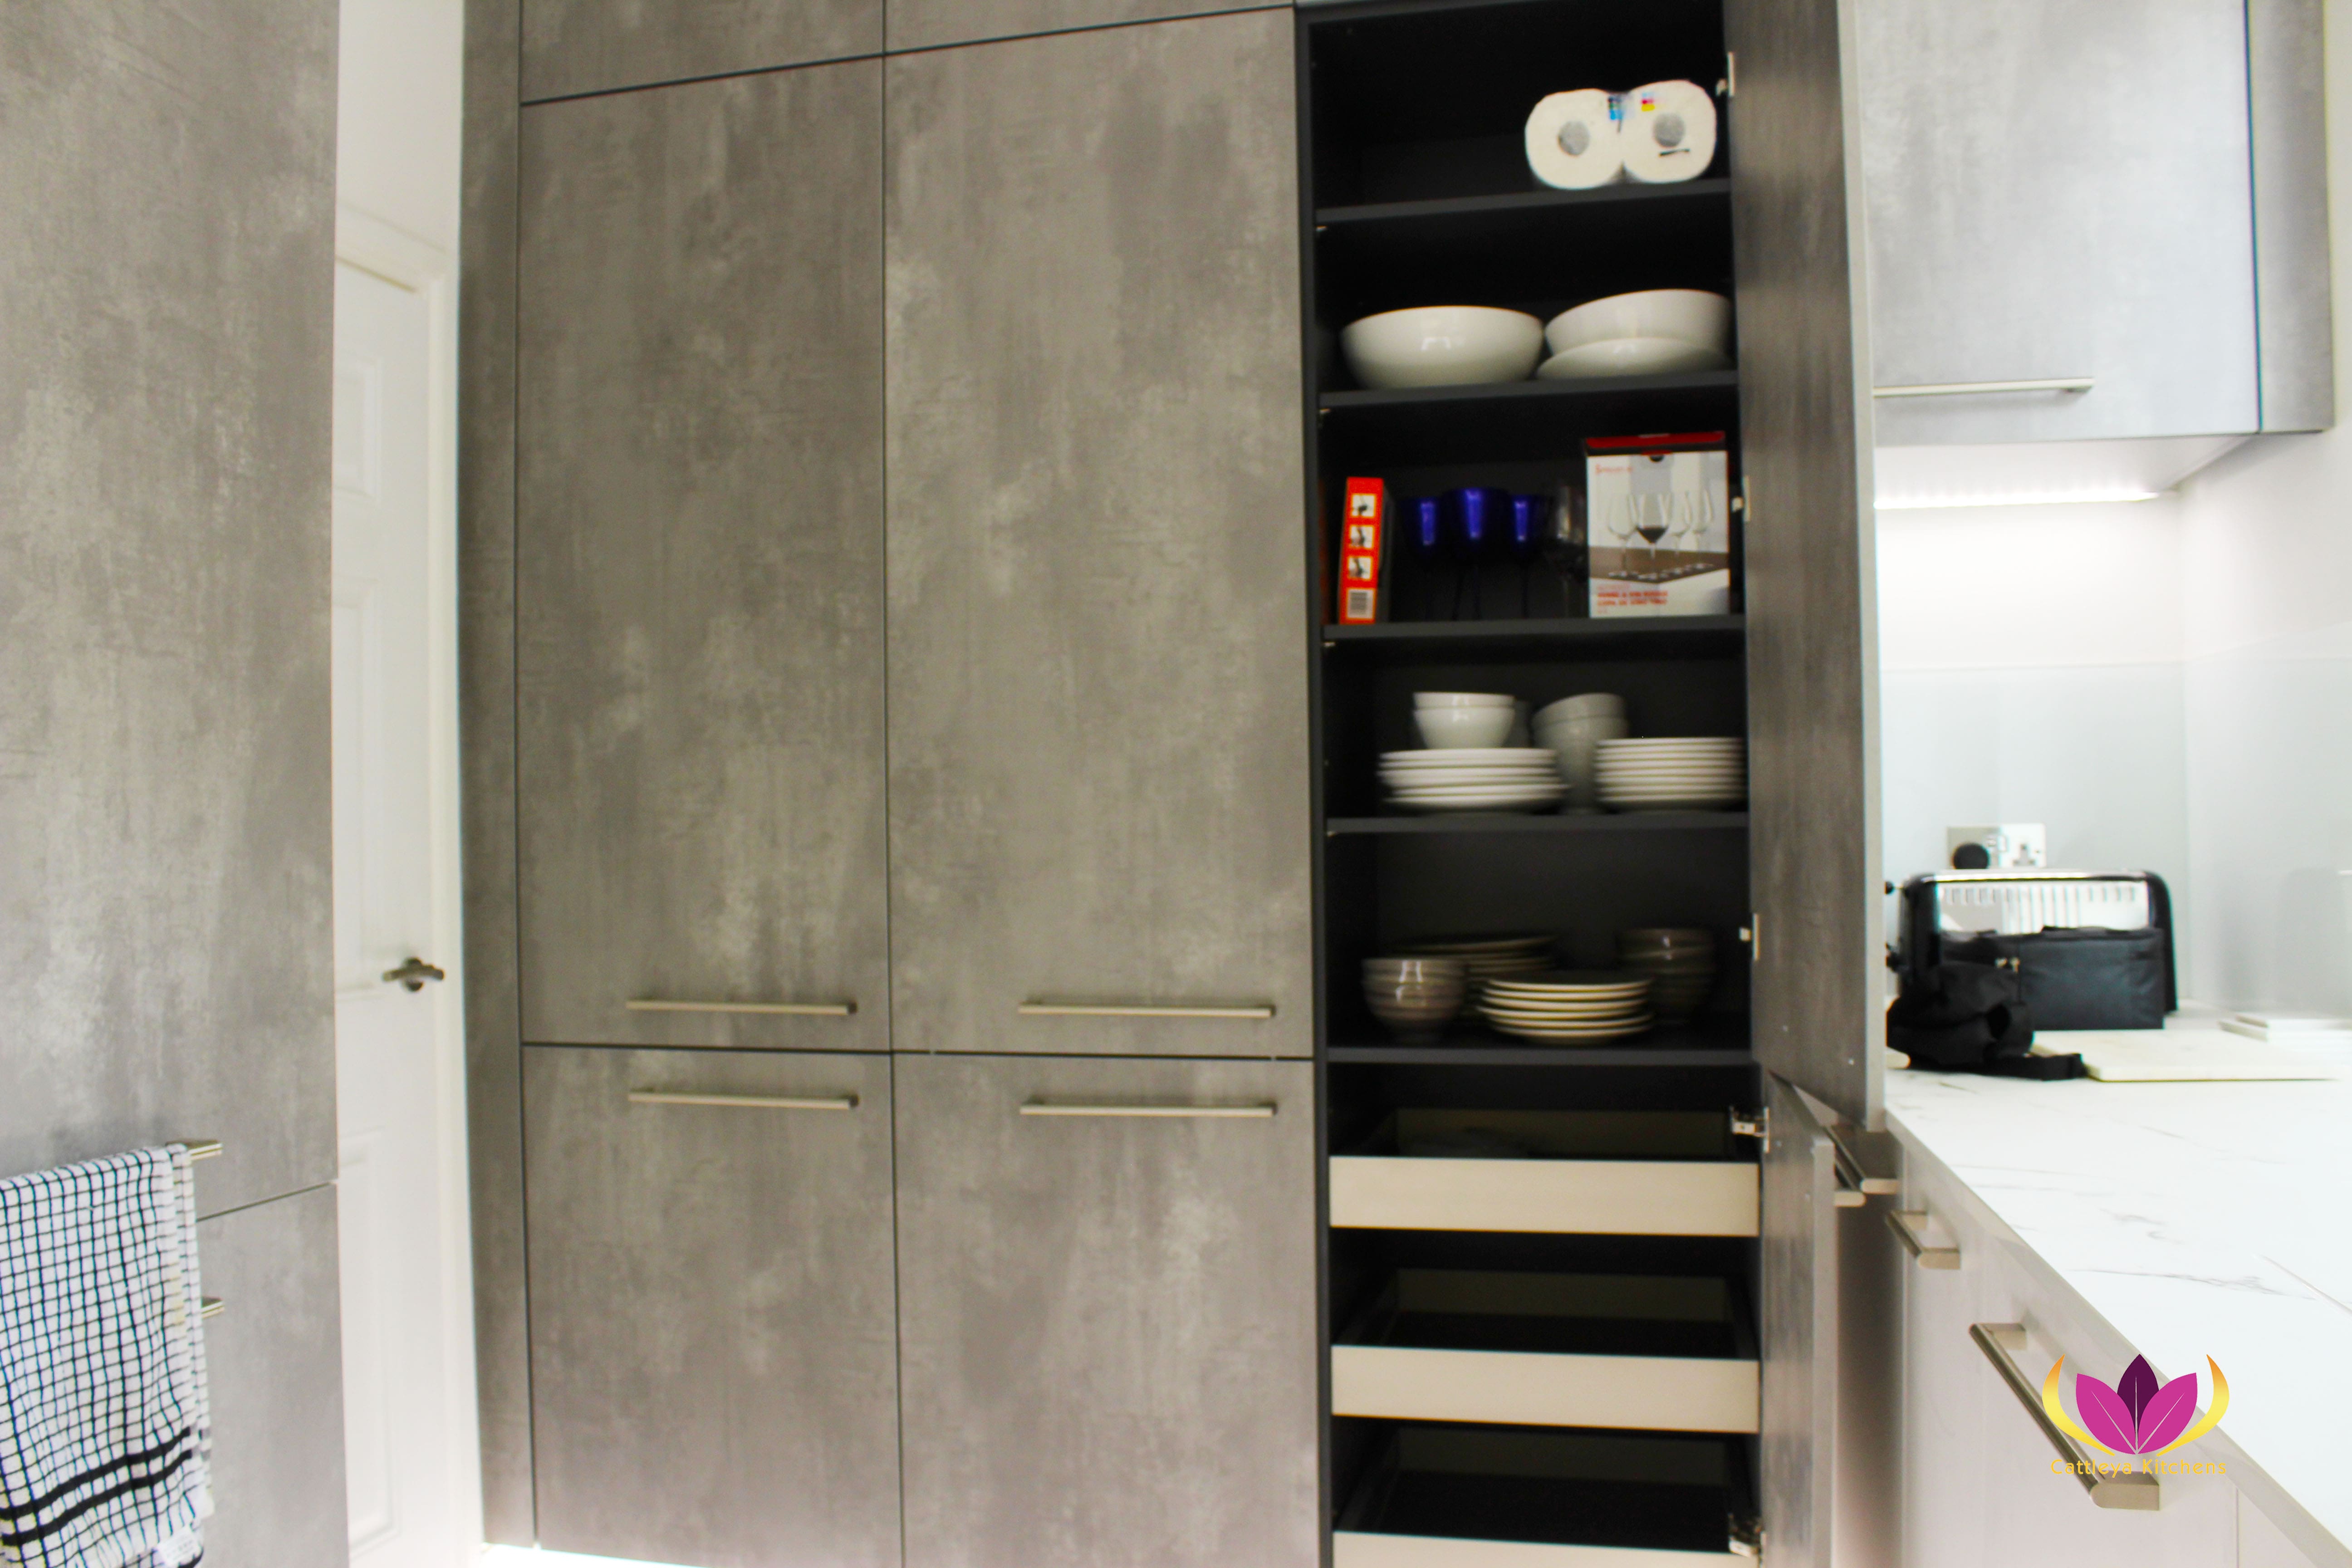 Inside layered shelves in cabinet - Belsize Park Finished Kitchen Project